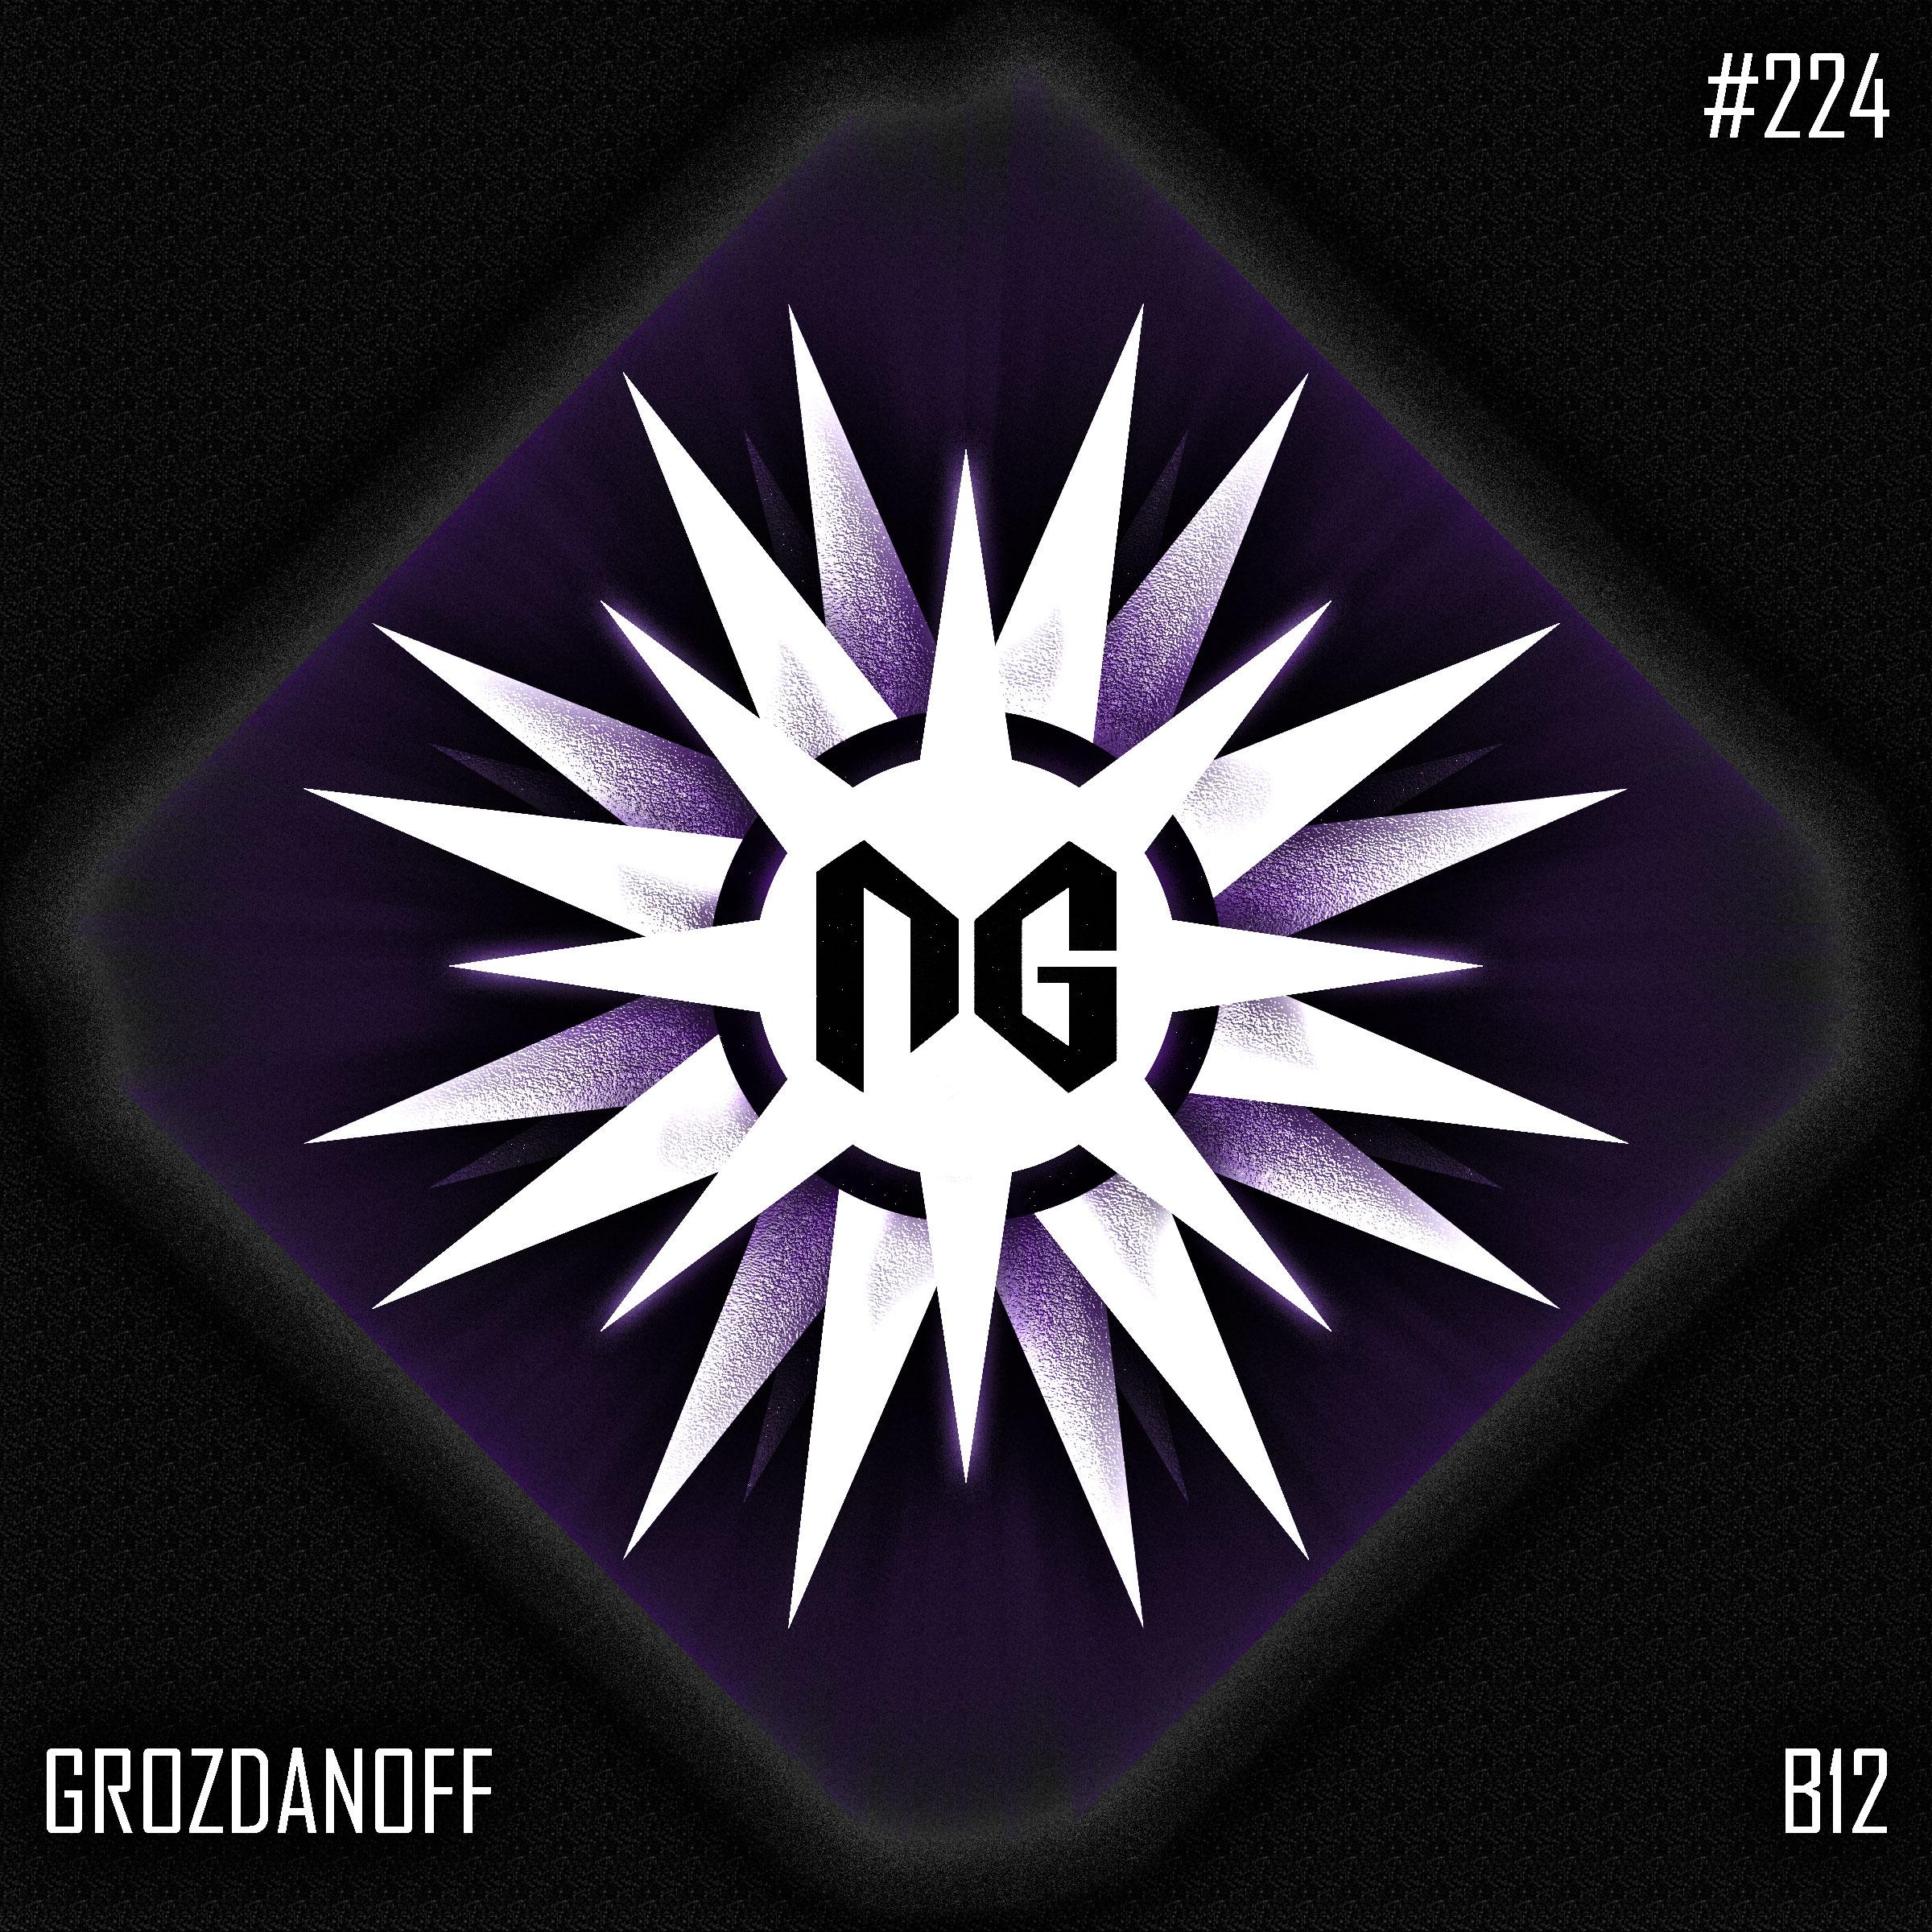 Grozdanoff - B12 (Original Mix)